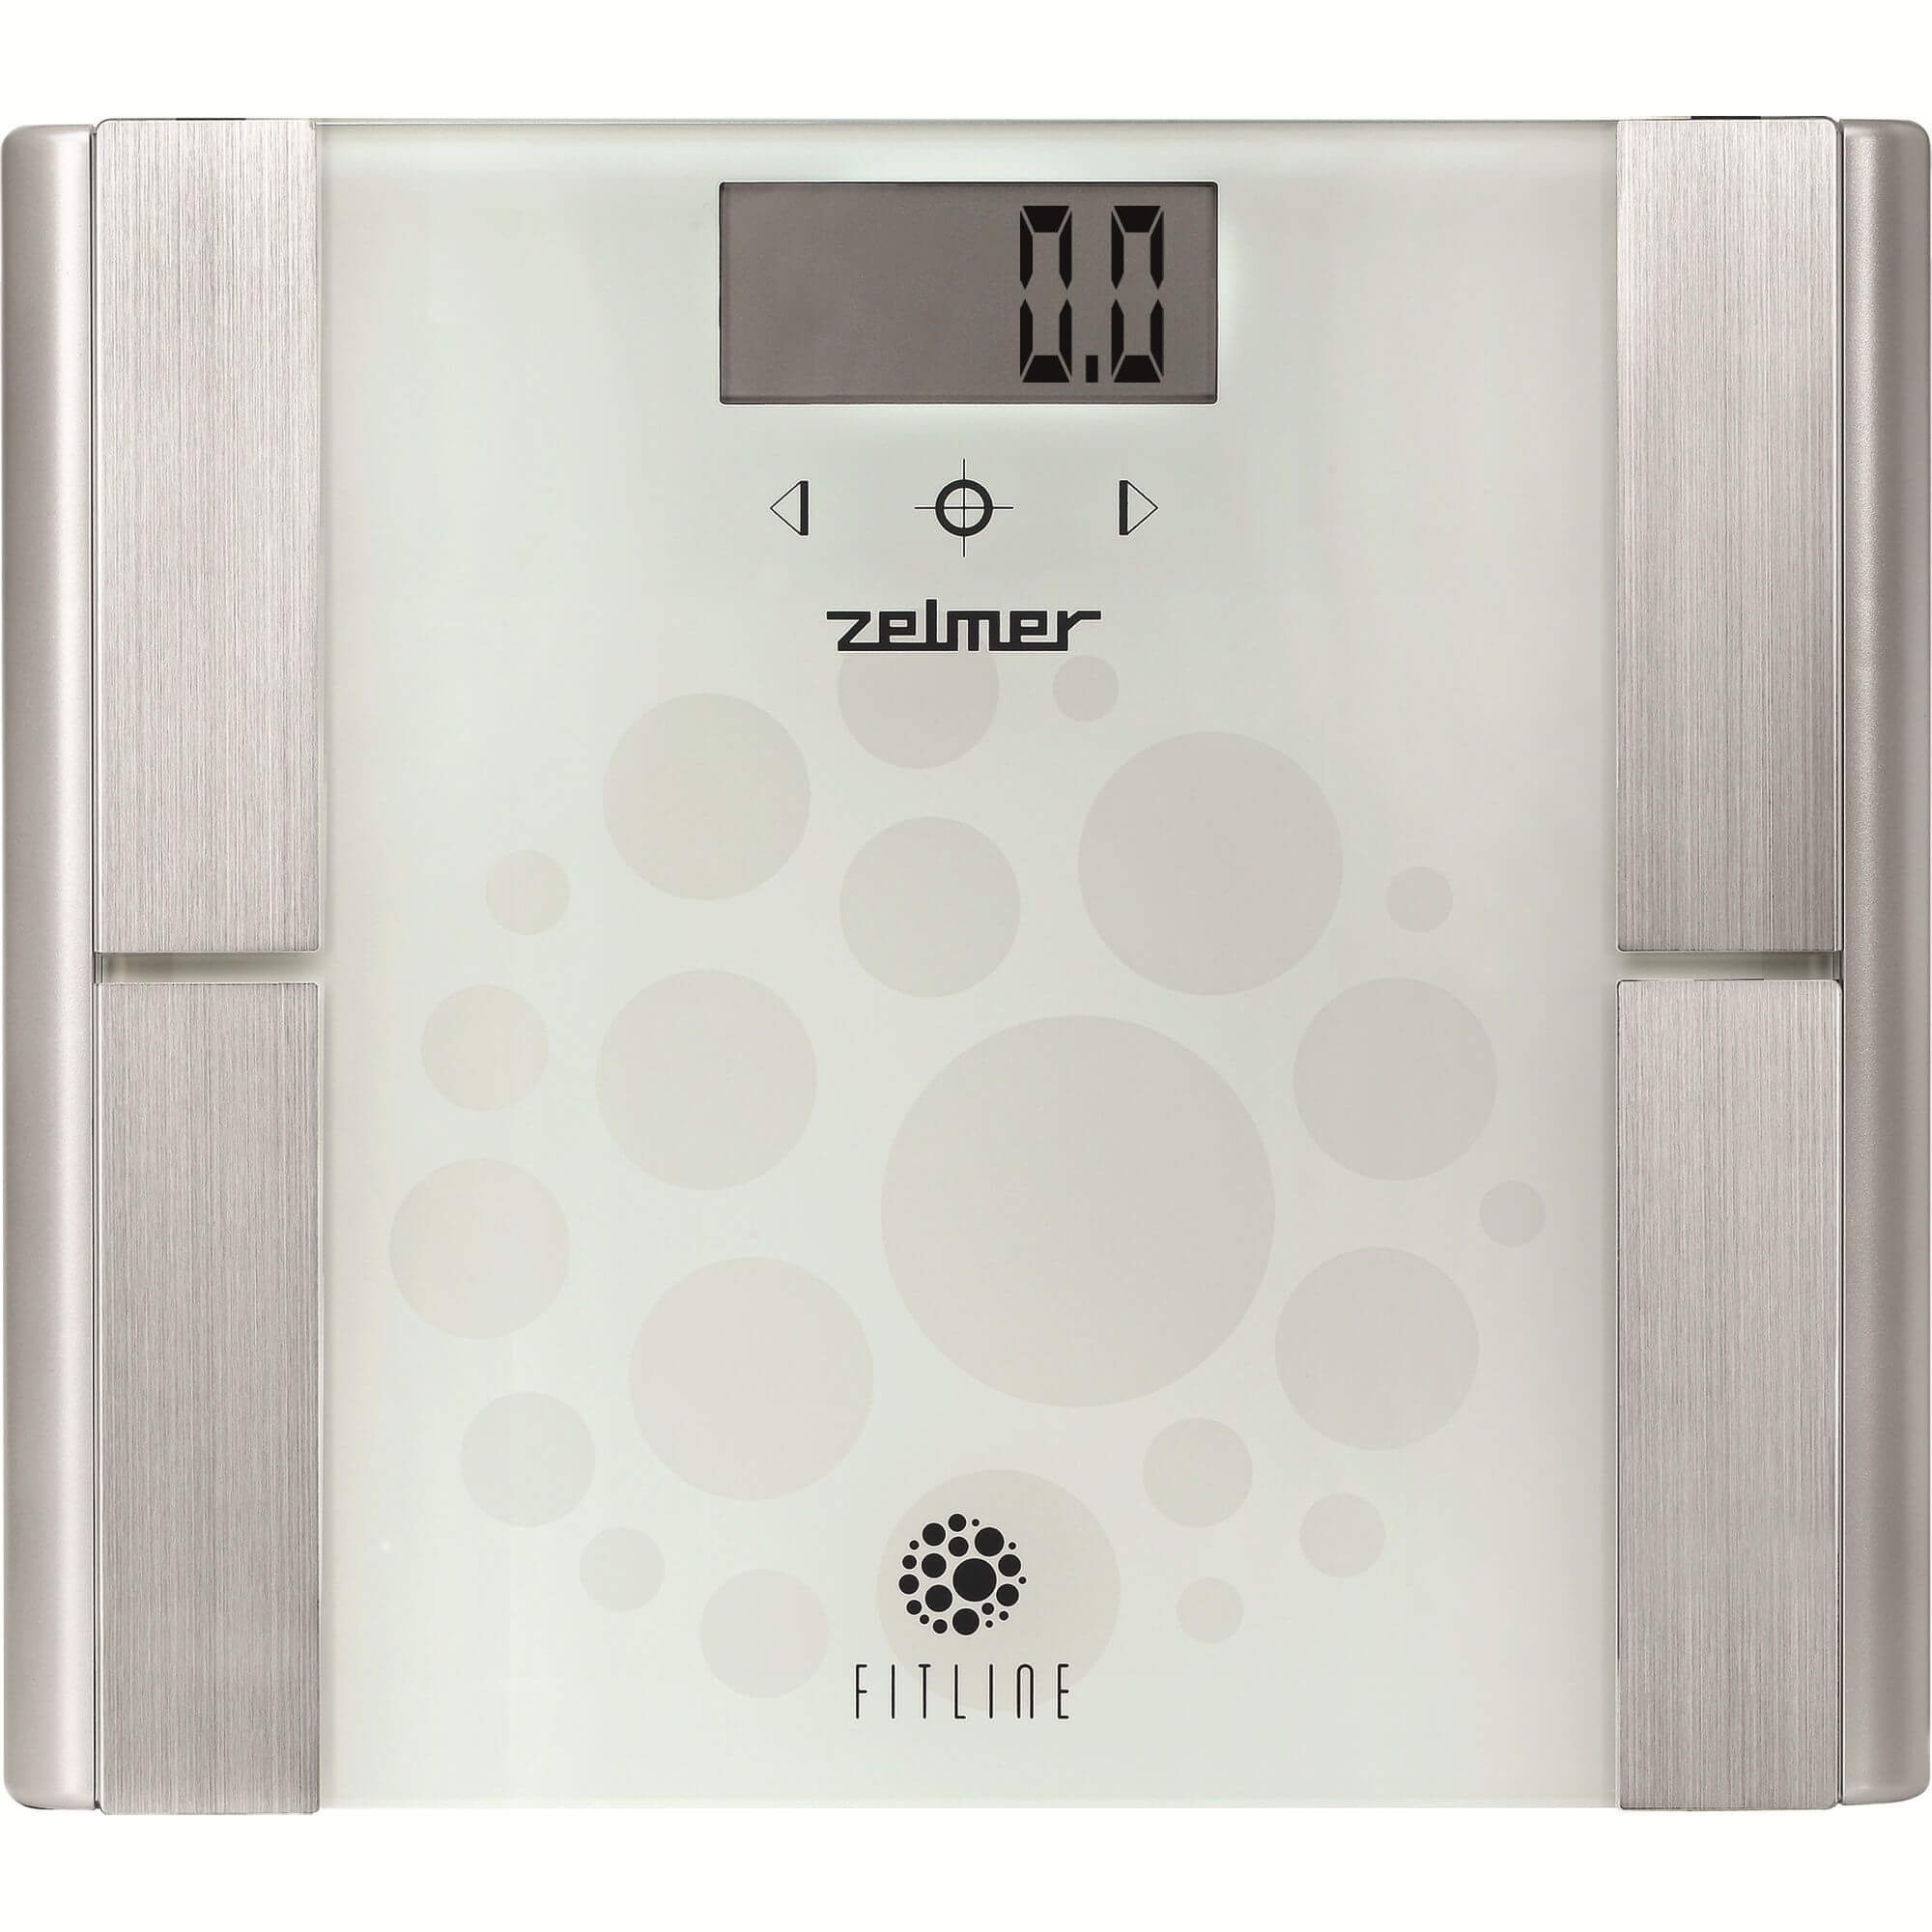  Cantar electronic Zelmer BS1850, 180 kg 